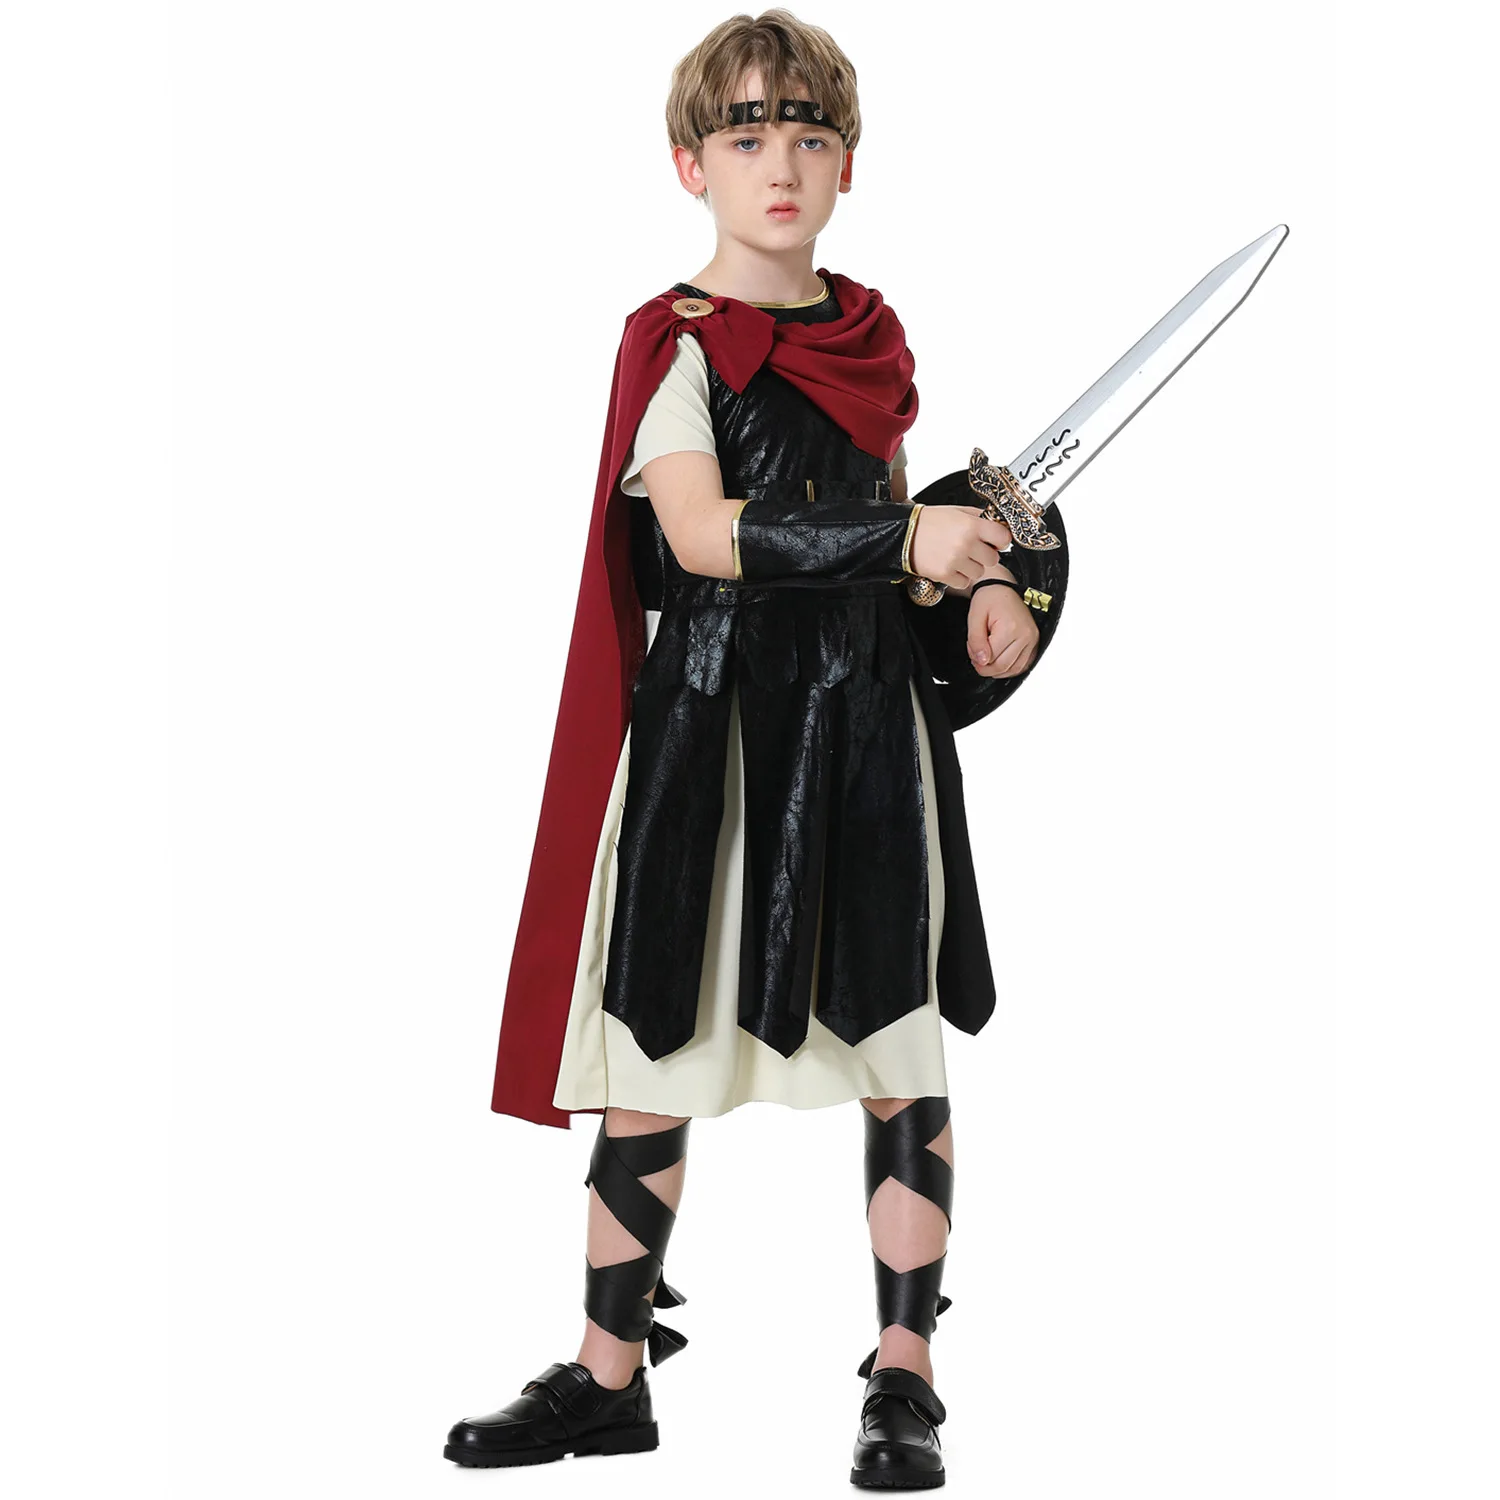 Gladiator Costume for Kids